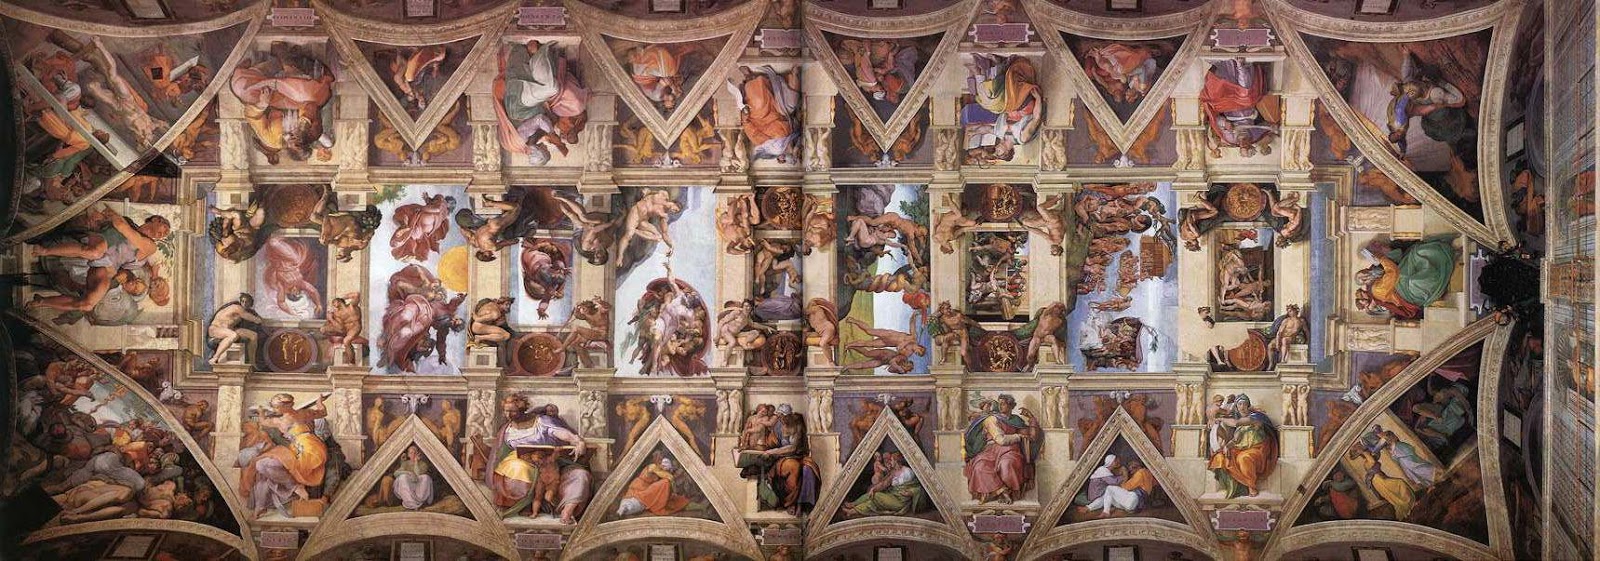 Michelangelo+Buonarroti-1475-1564 (381).jpg